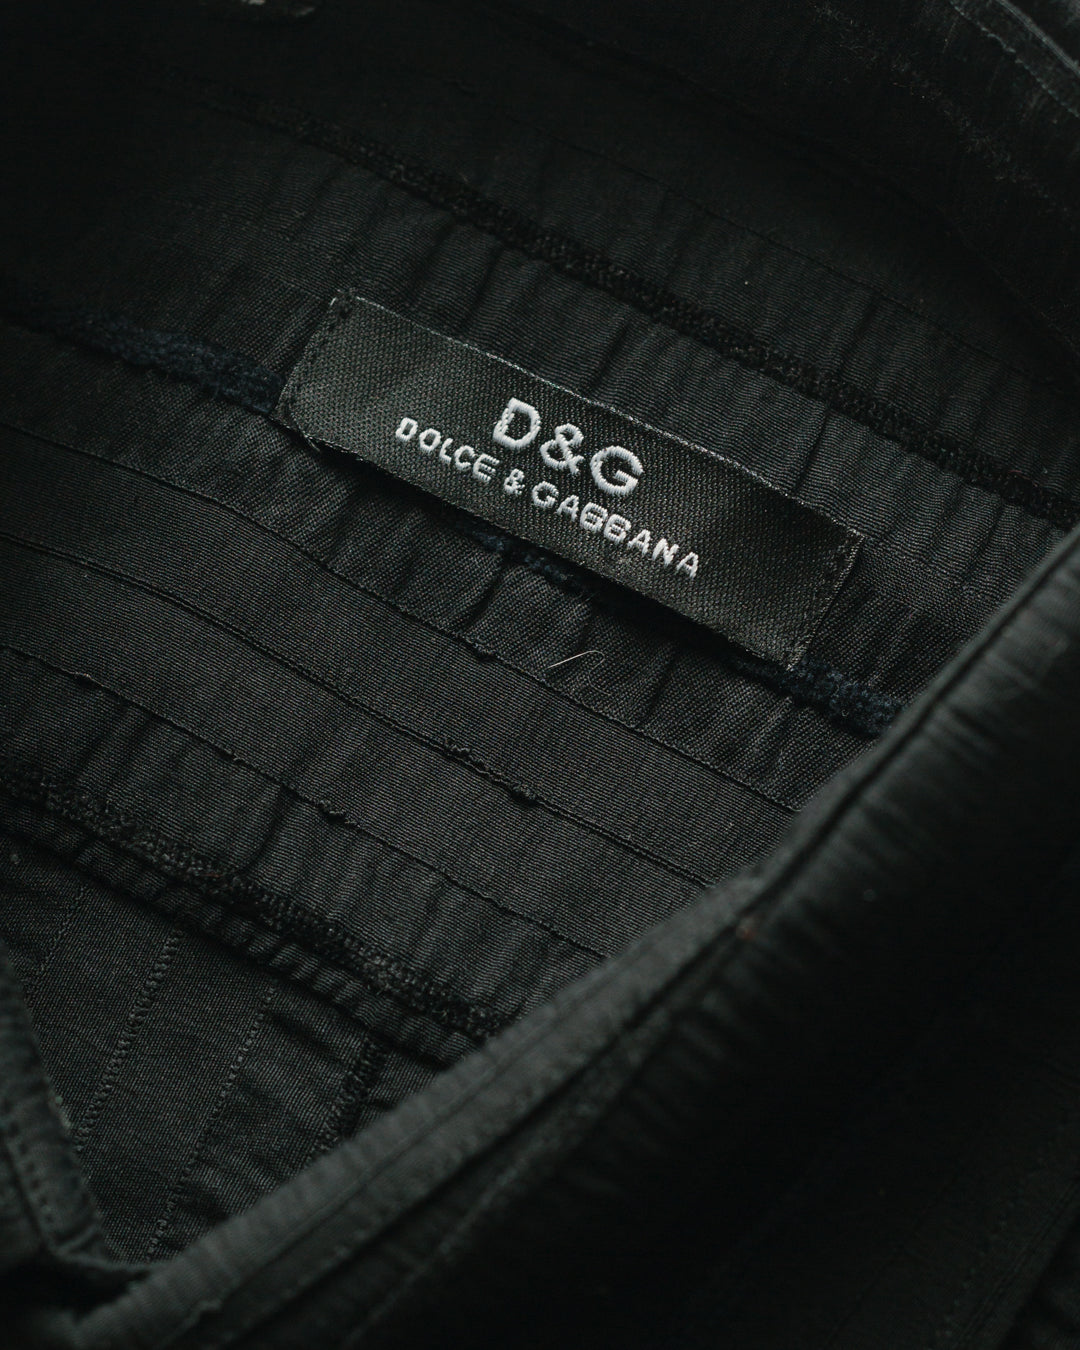 Dolce & Gabbana Self Patterned Button Down